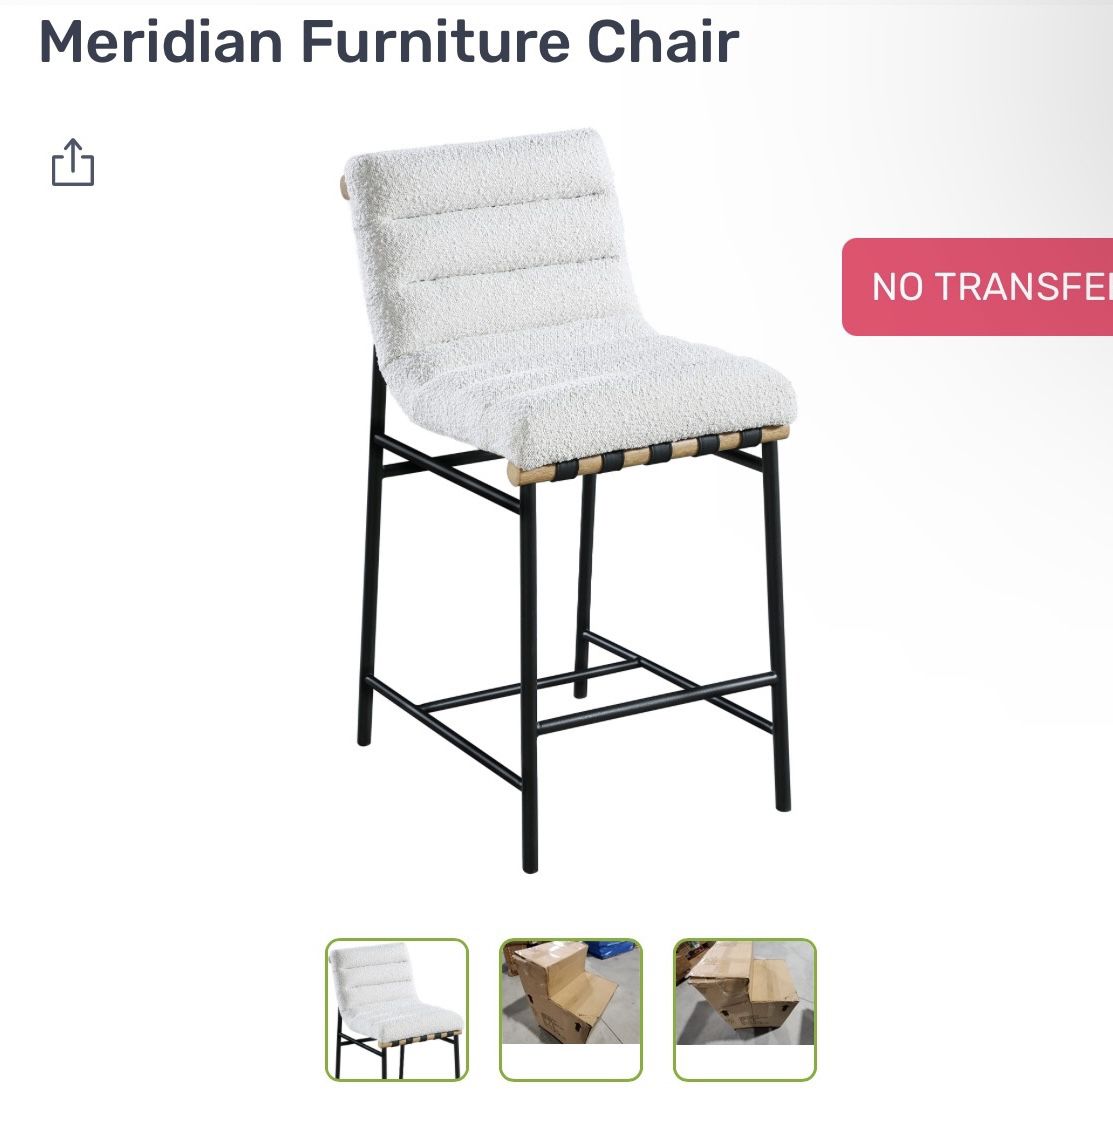 Meridian chair